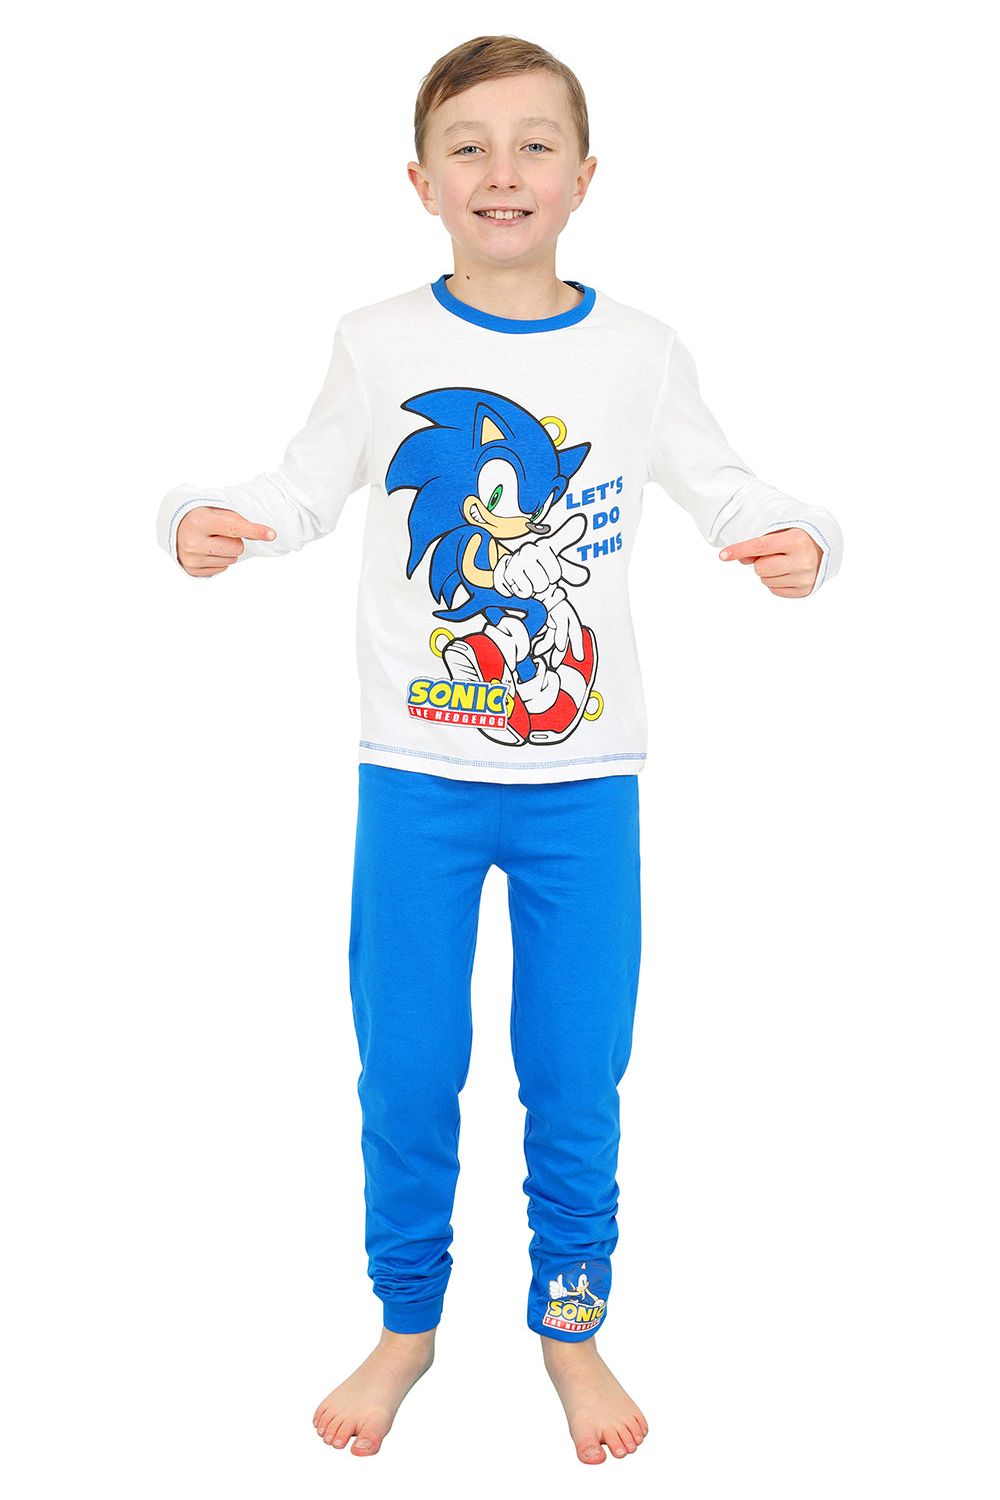 Sonic The Hedgehog Long Blue White Pyjamas